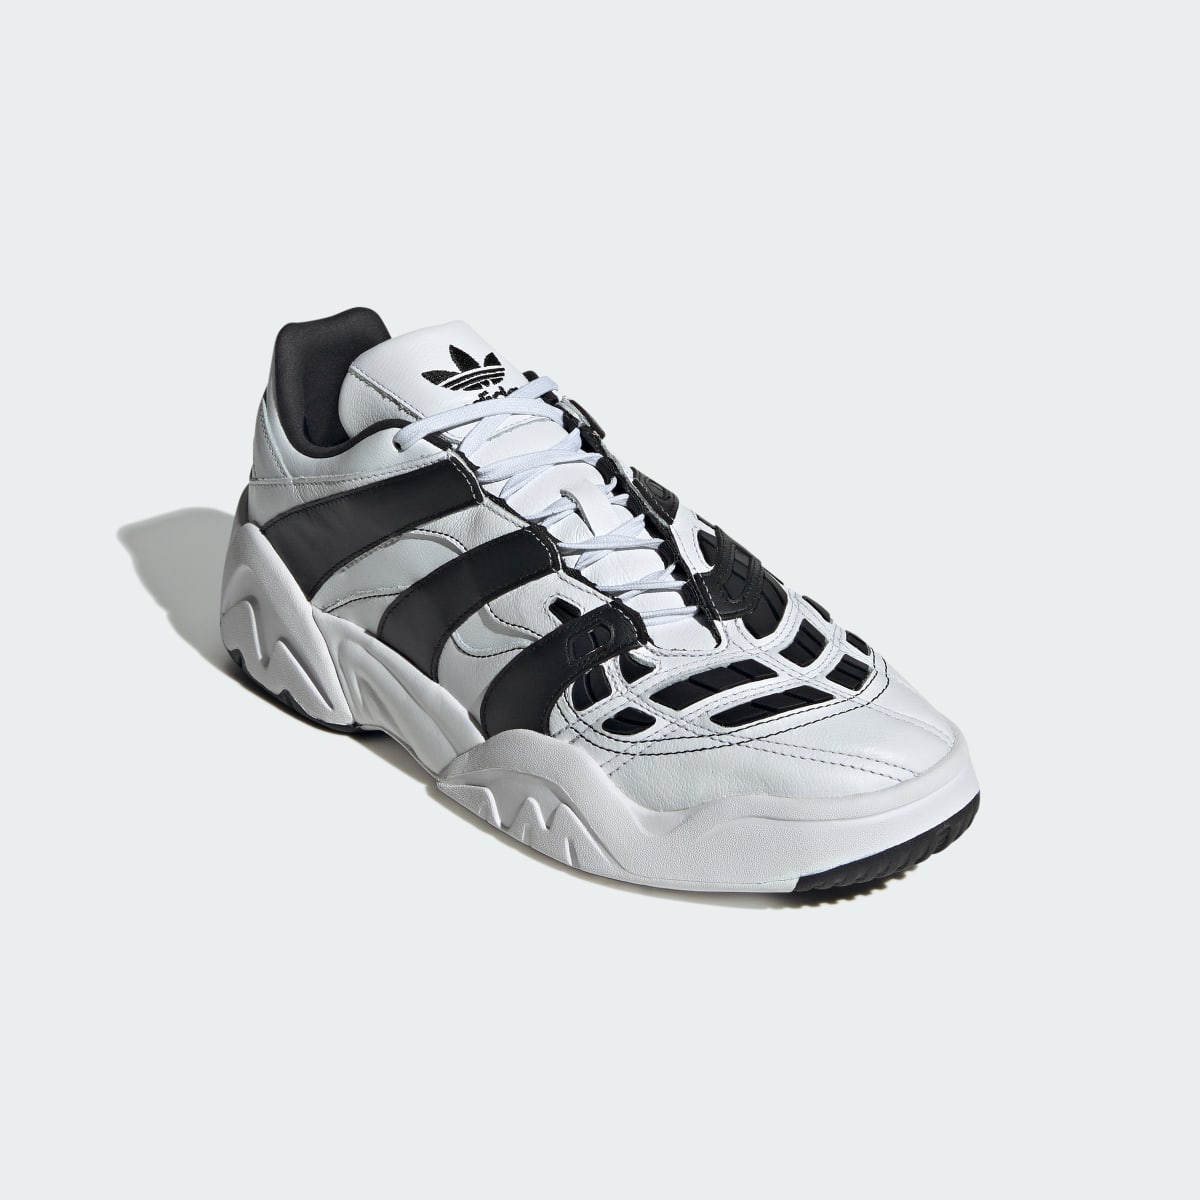 Adidas Predator XLG Shoes. 5